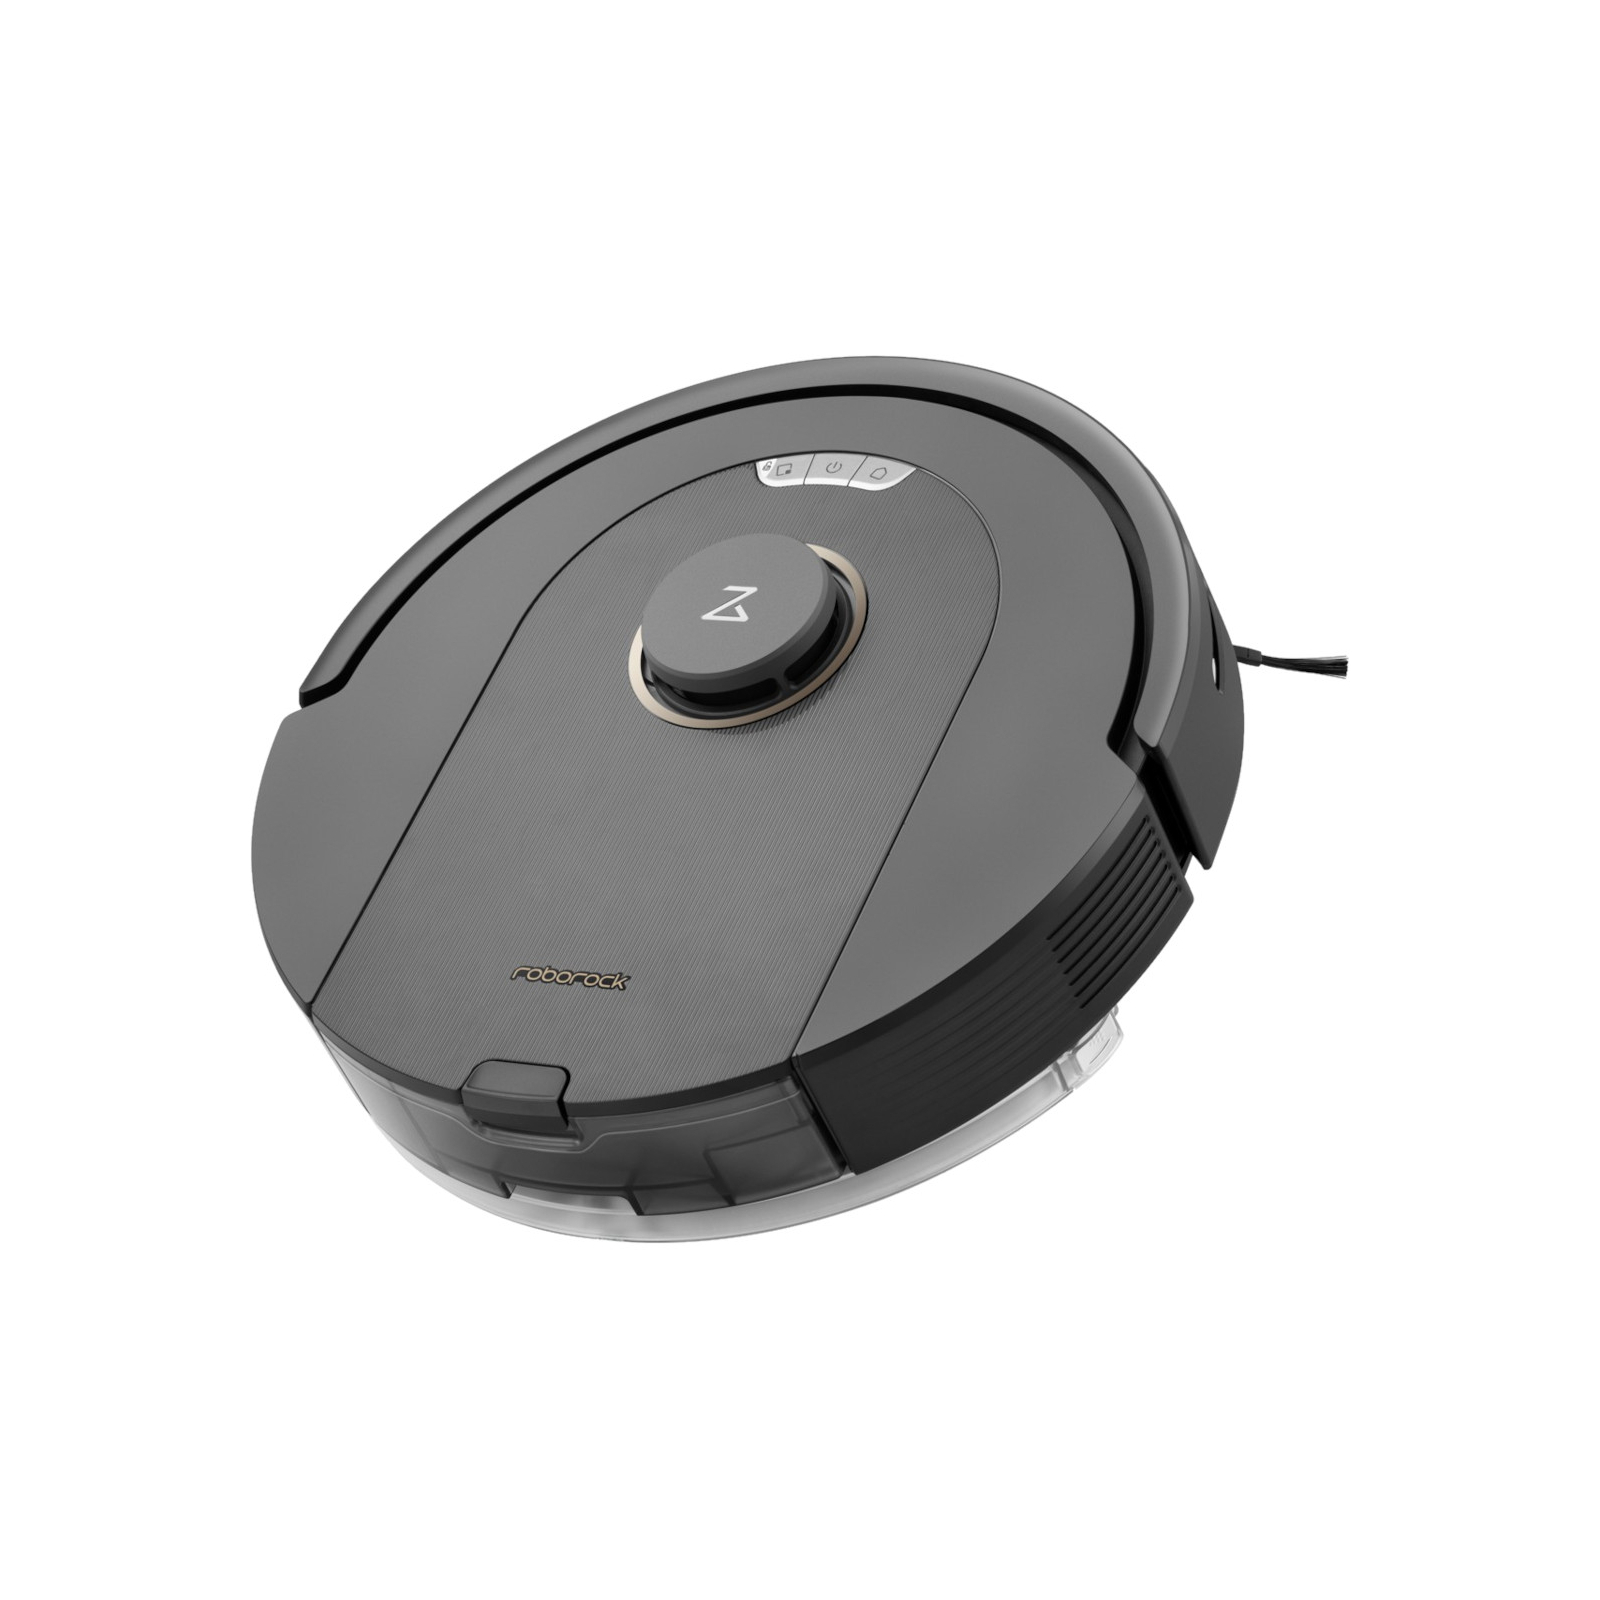 Пылесос Roborock Vacuum Cleaner Q5 Pro Black (Q5Pr52-00) изображение 2